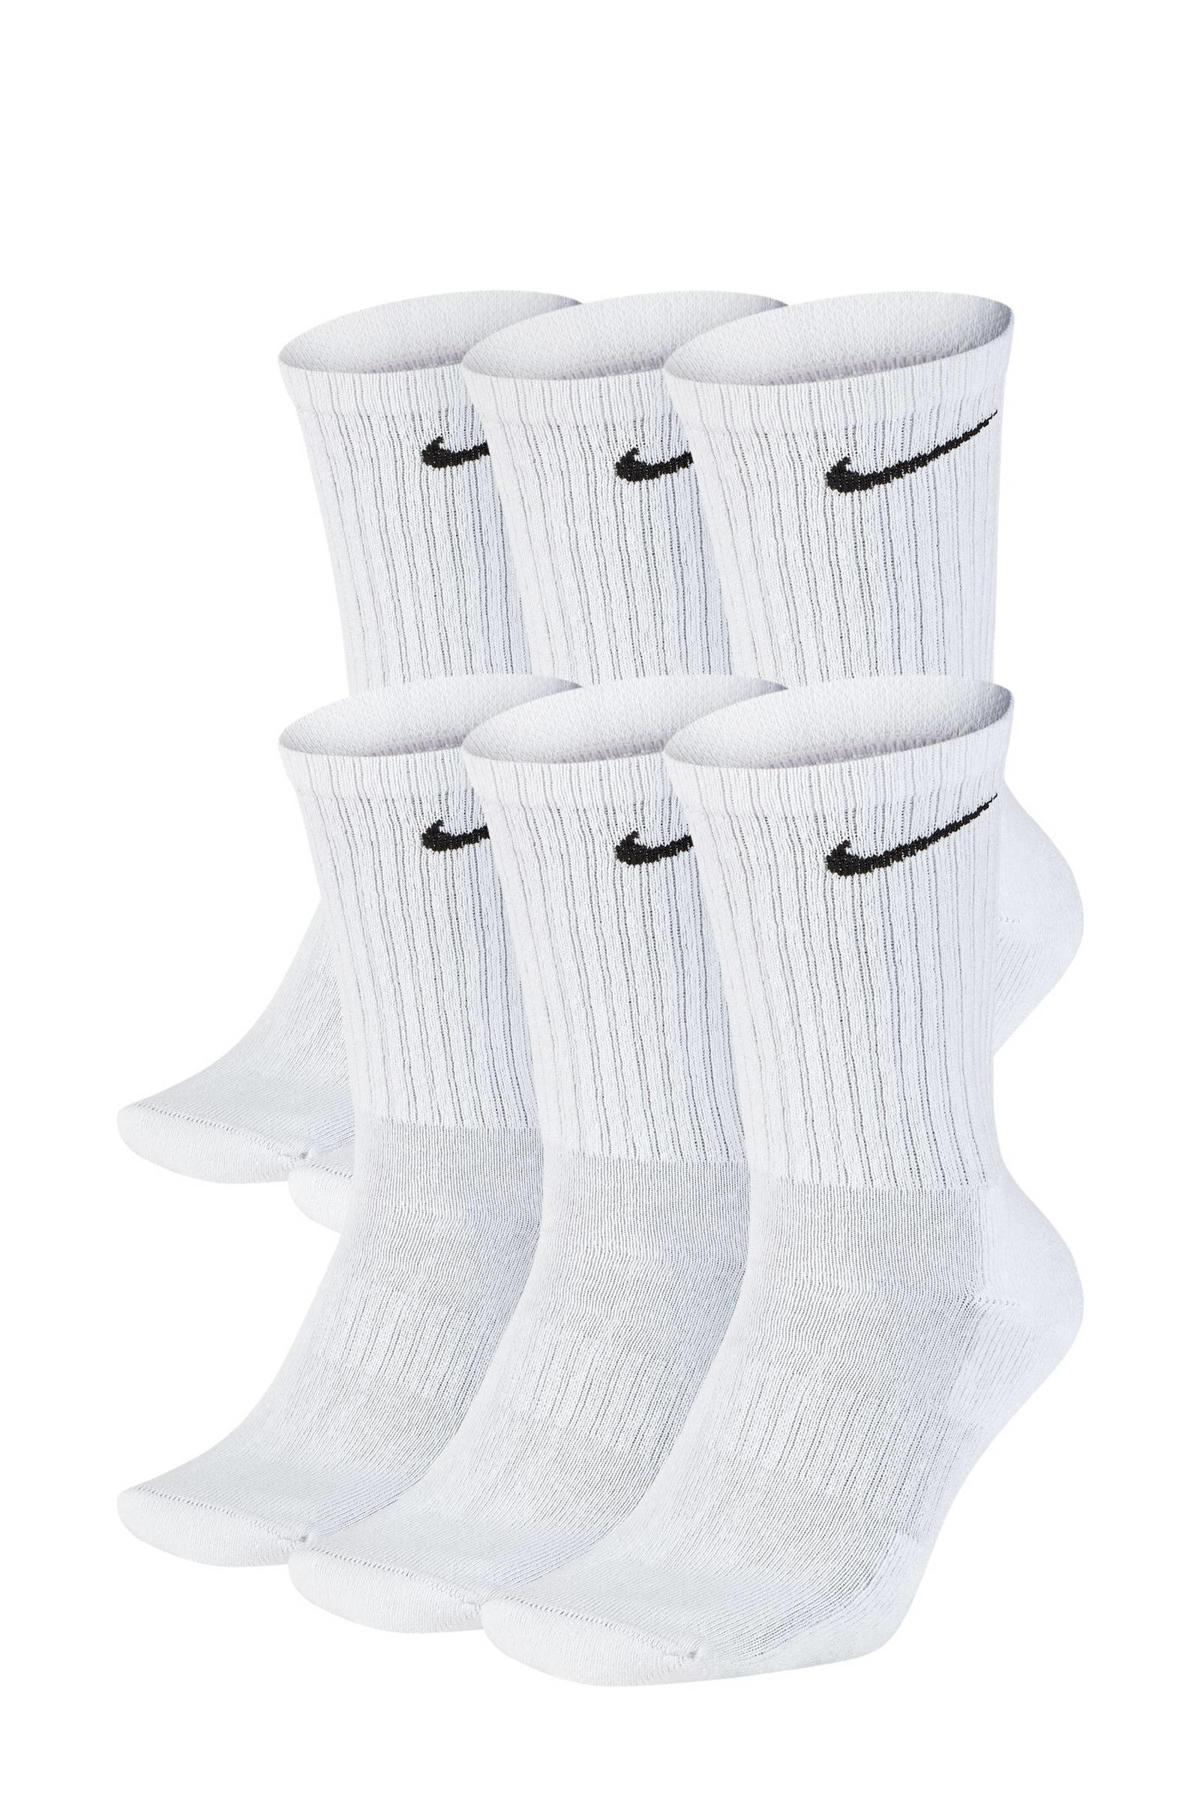 Situatie beddengoed uitgebreid Nike sokken Everyday Crush- set van 6 wit | wehkamp